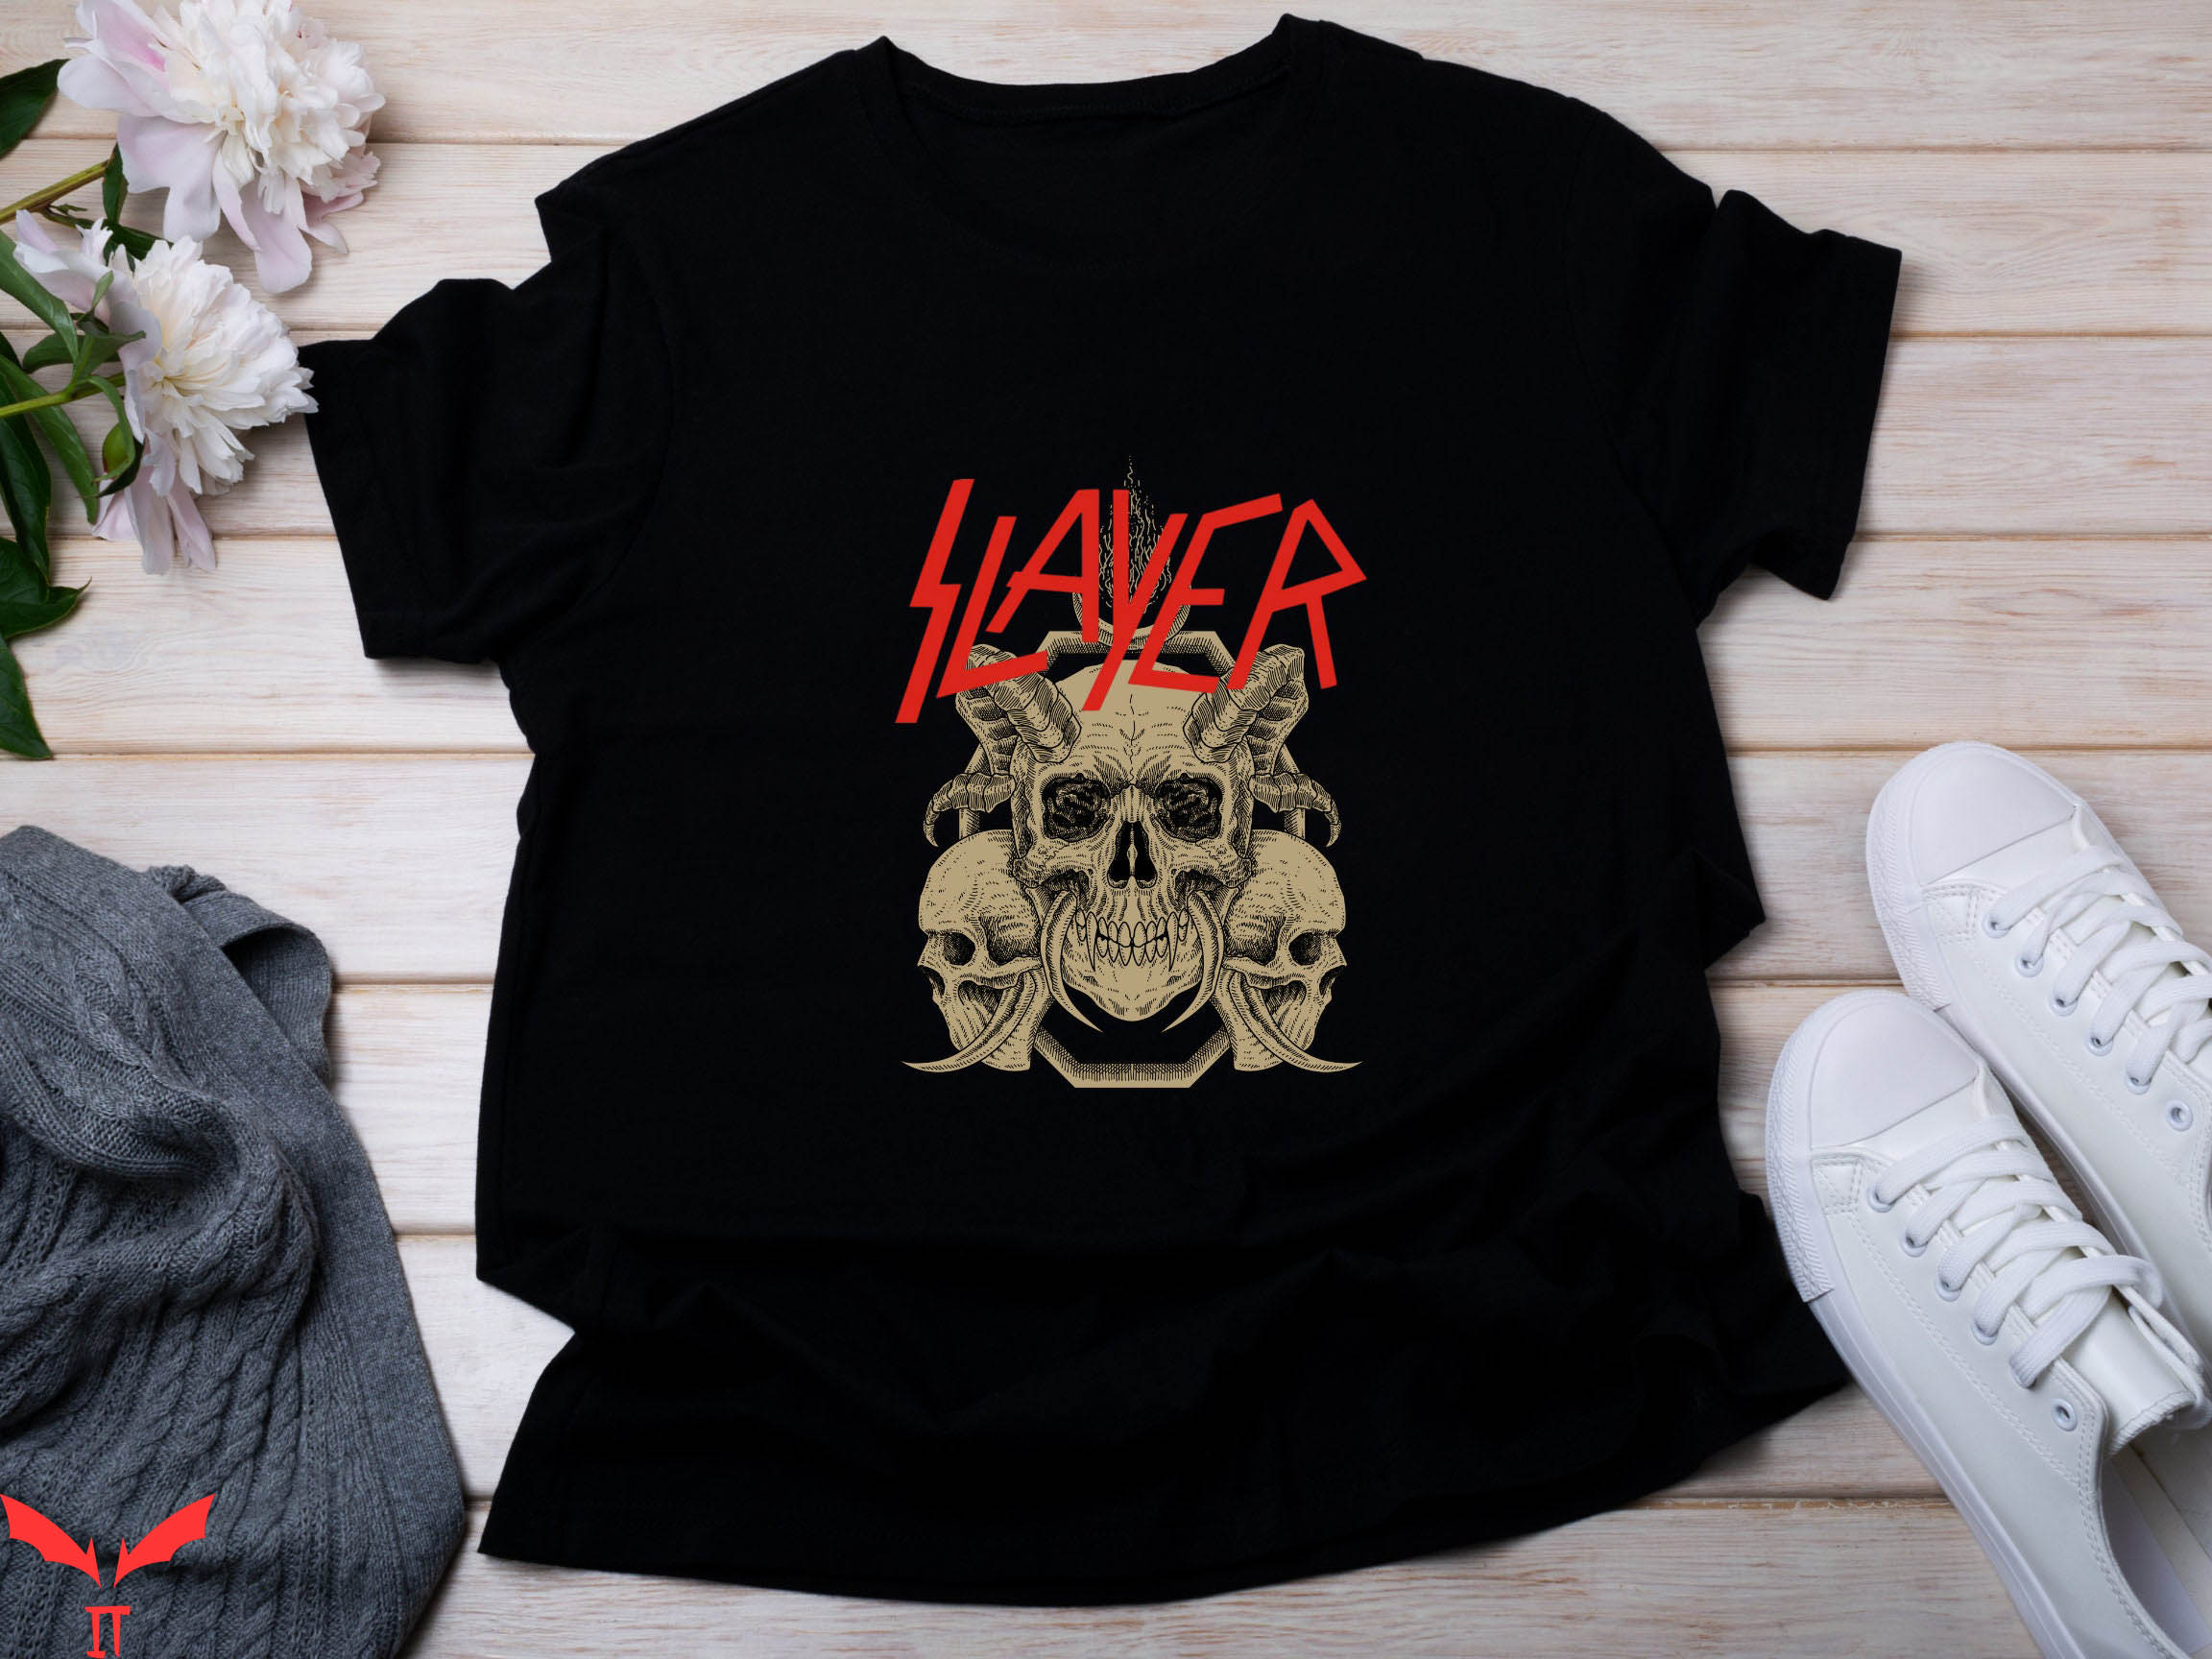 Vintage Slayer T-Shirt Retro Rock Tough Style Tee Shirt